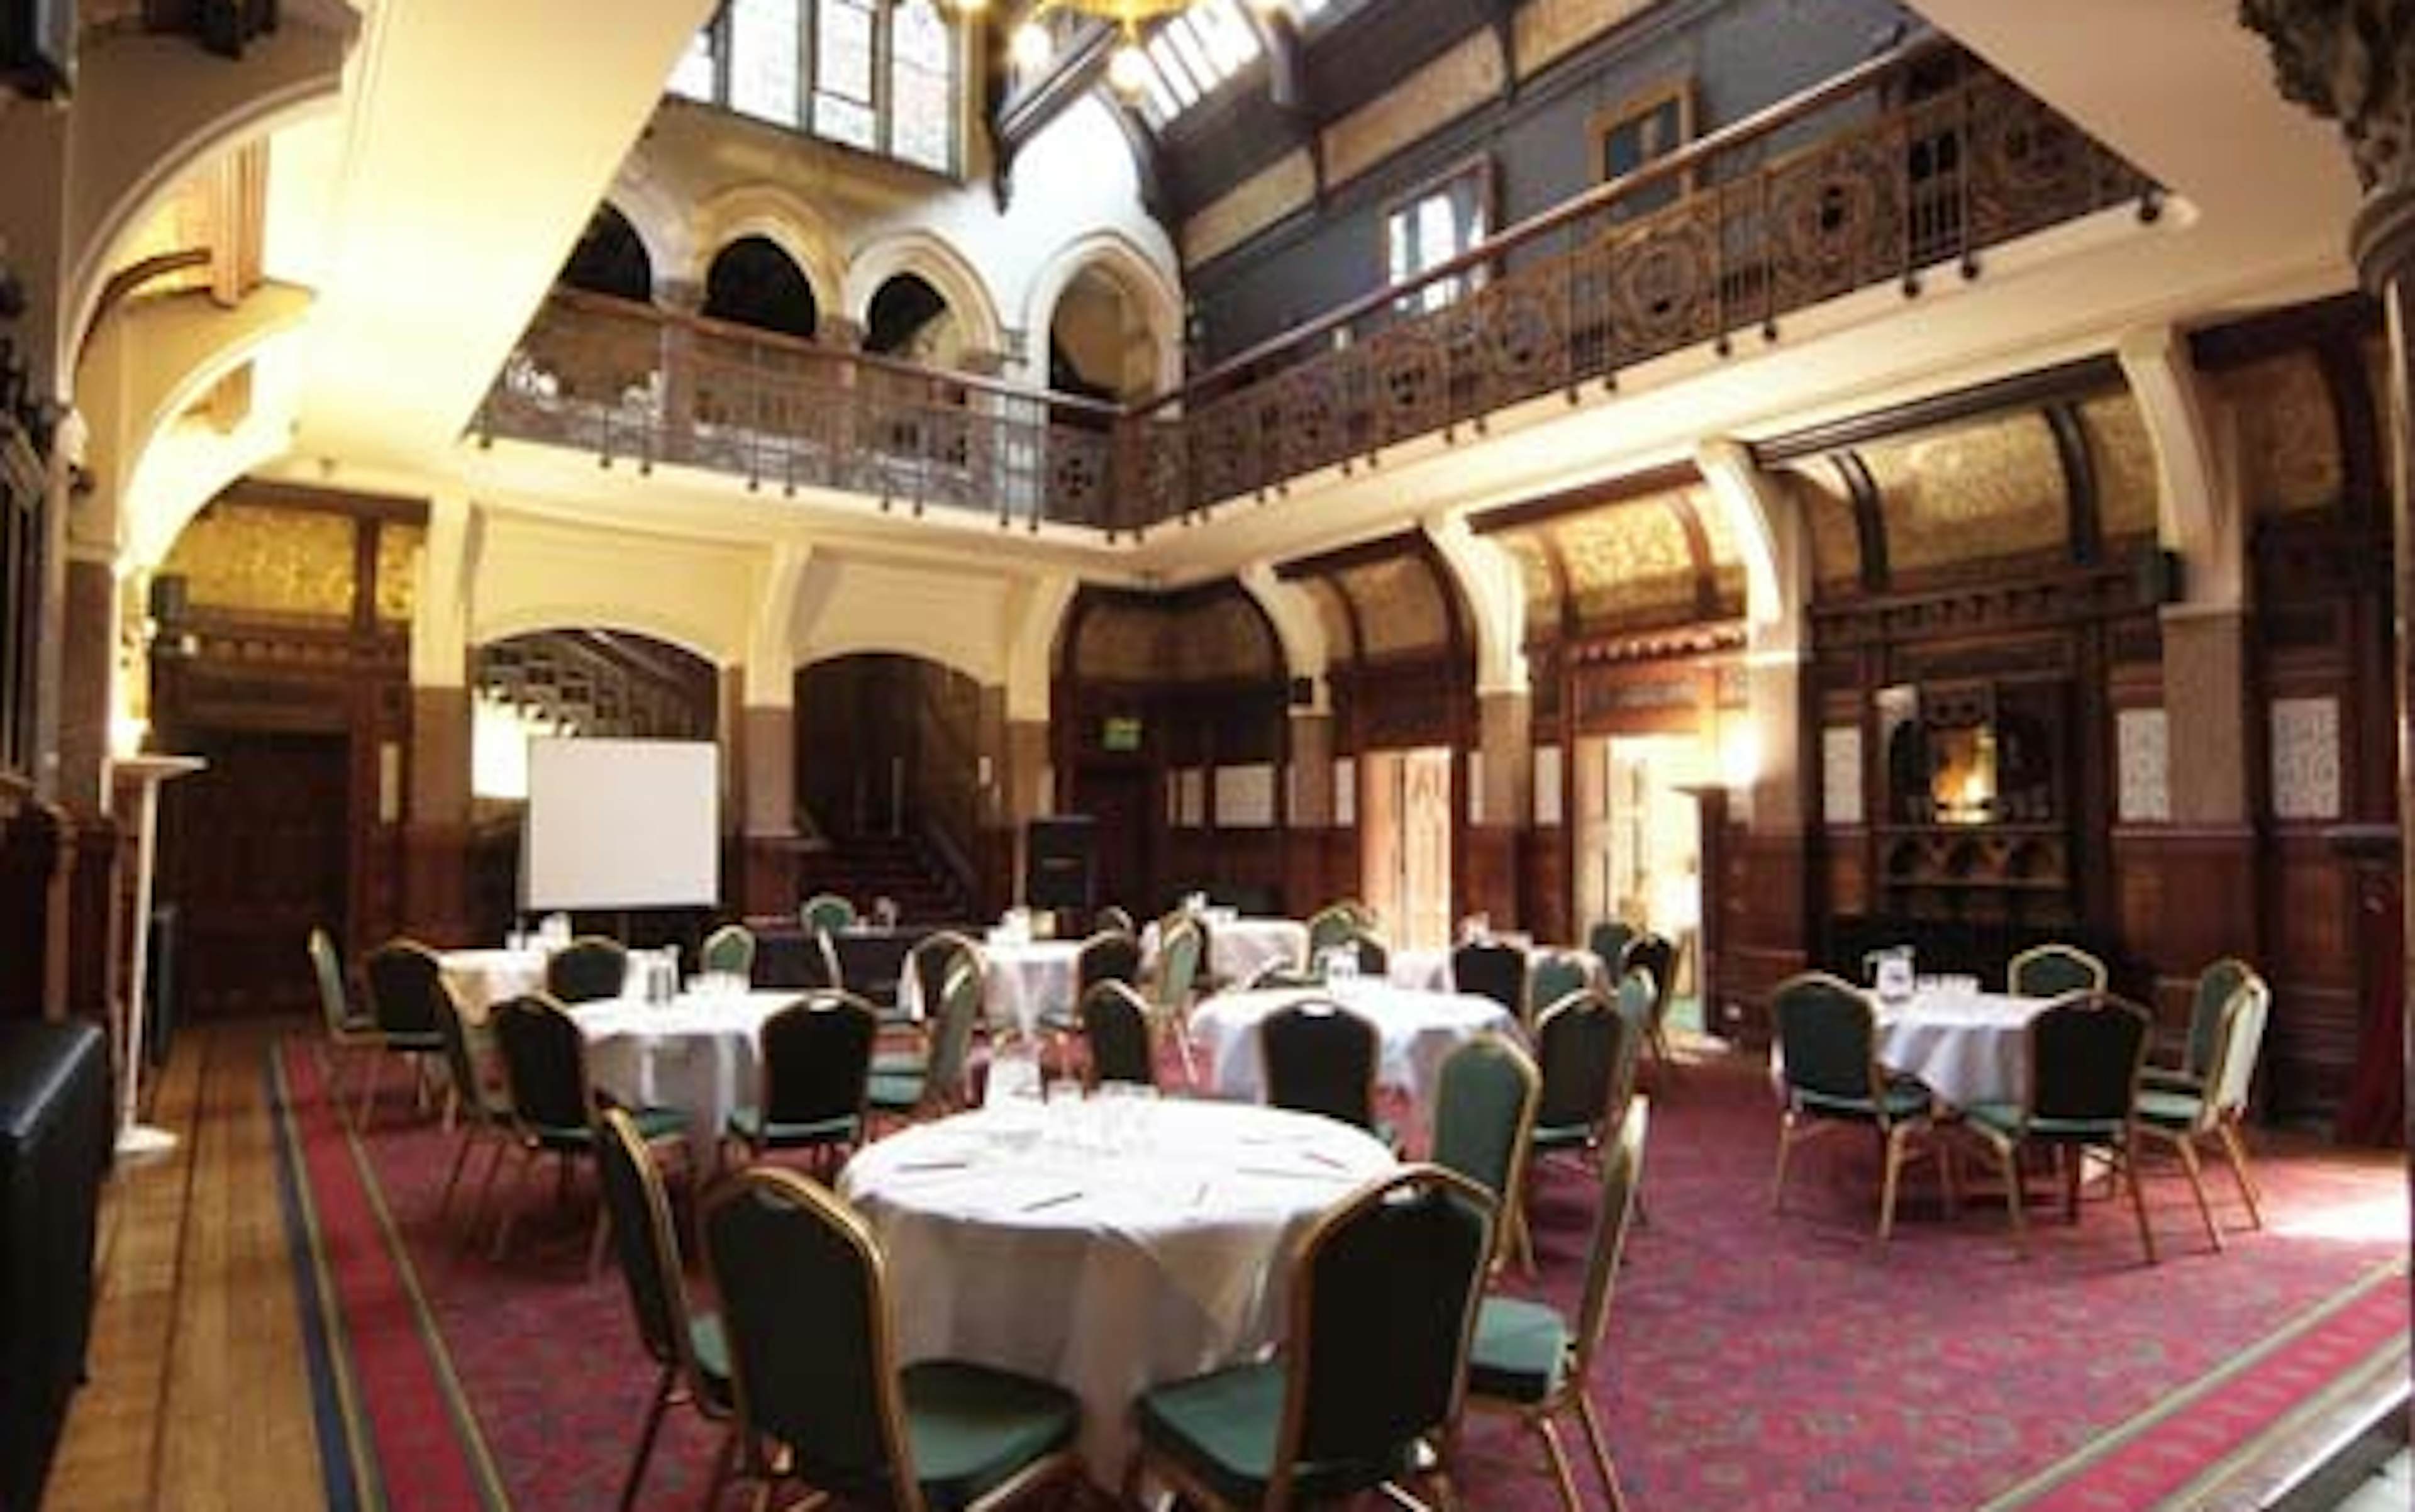 Highbury Hall - Main Hall image 1